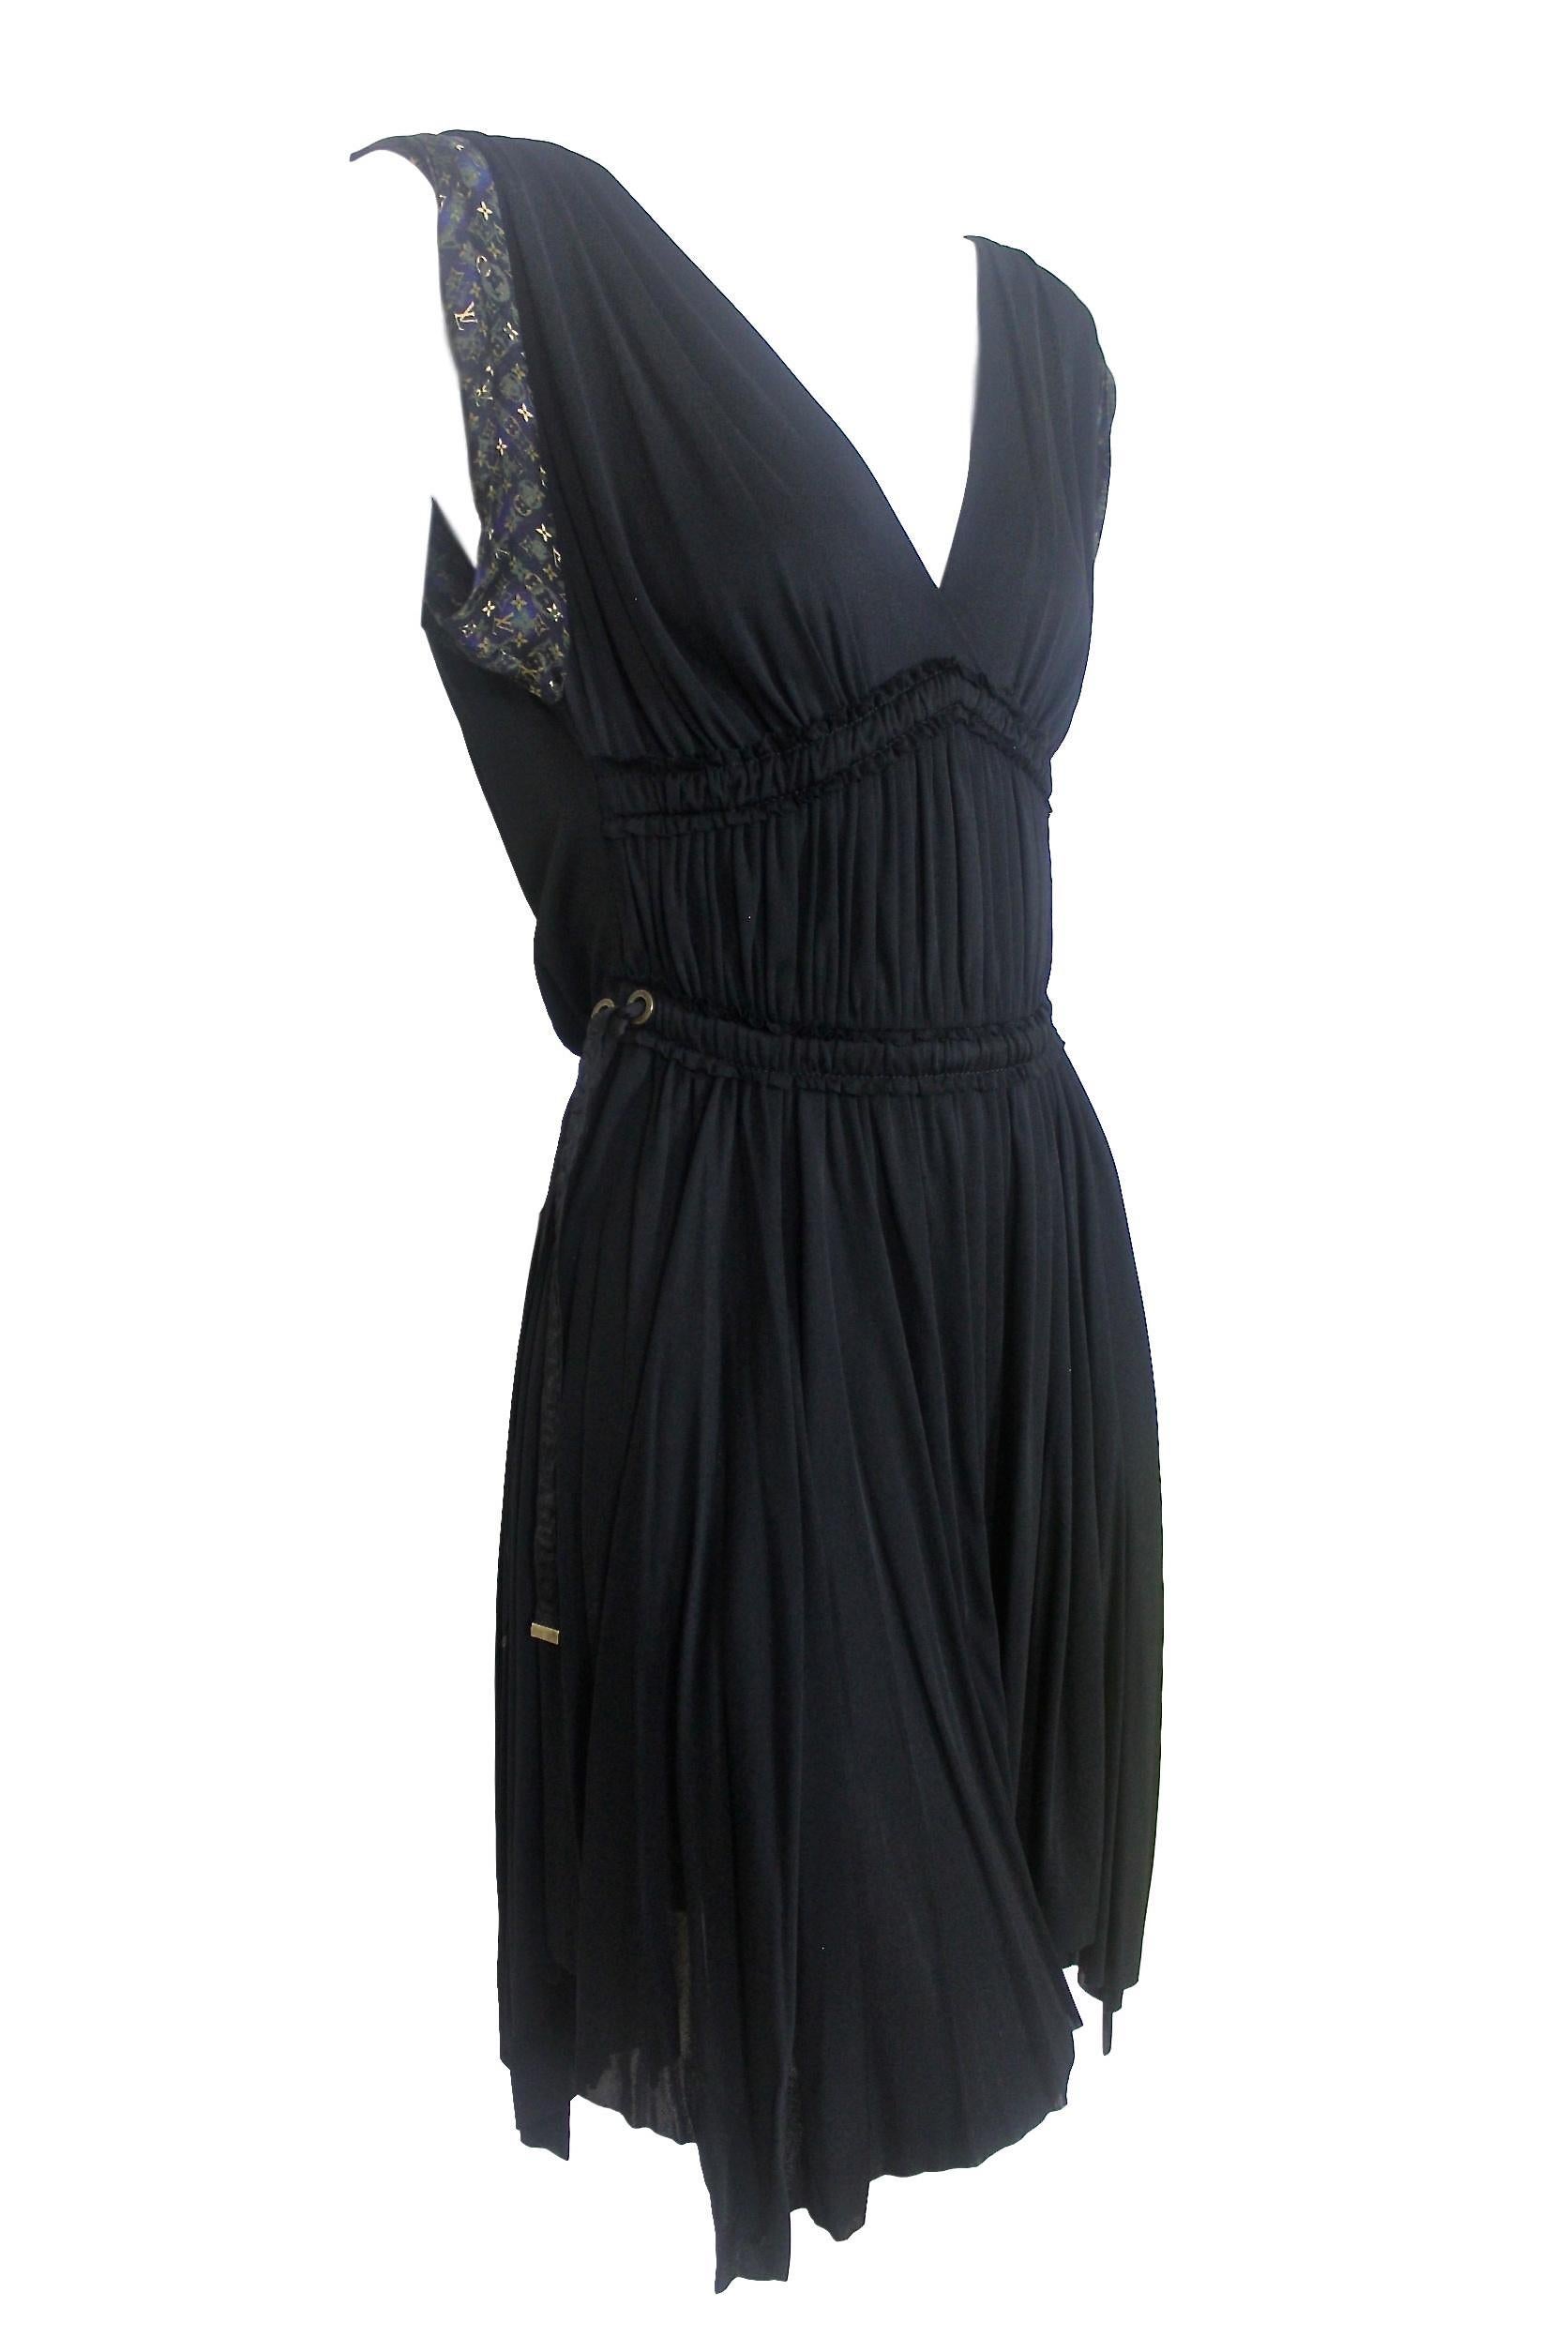 Louis Vuitton Grecian Style Dress For Sale 2